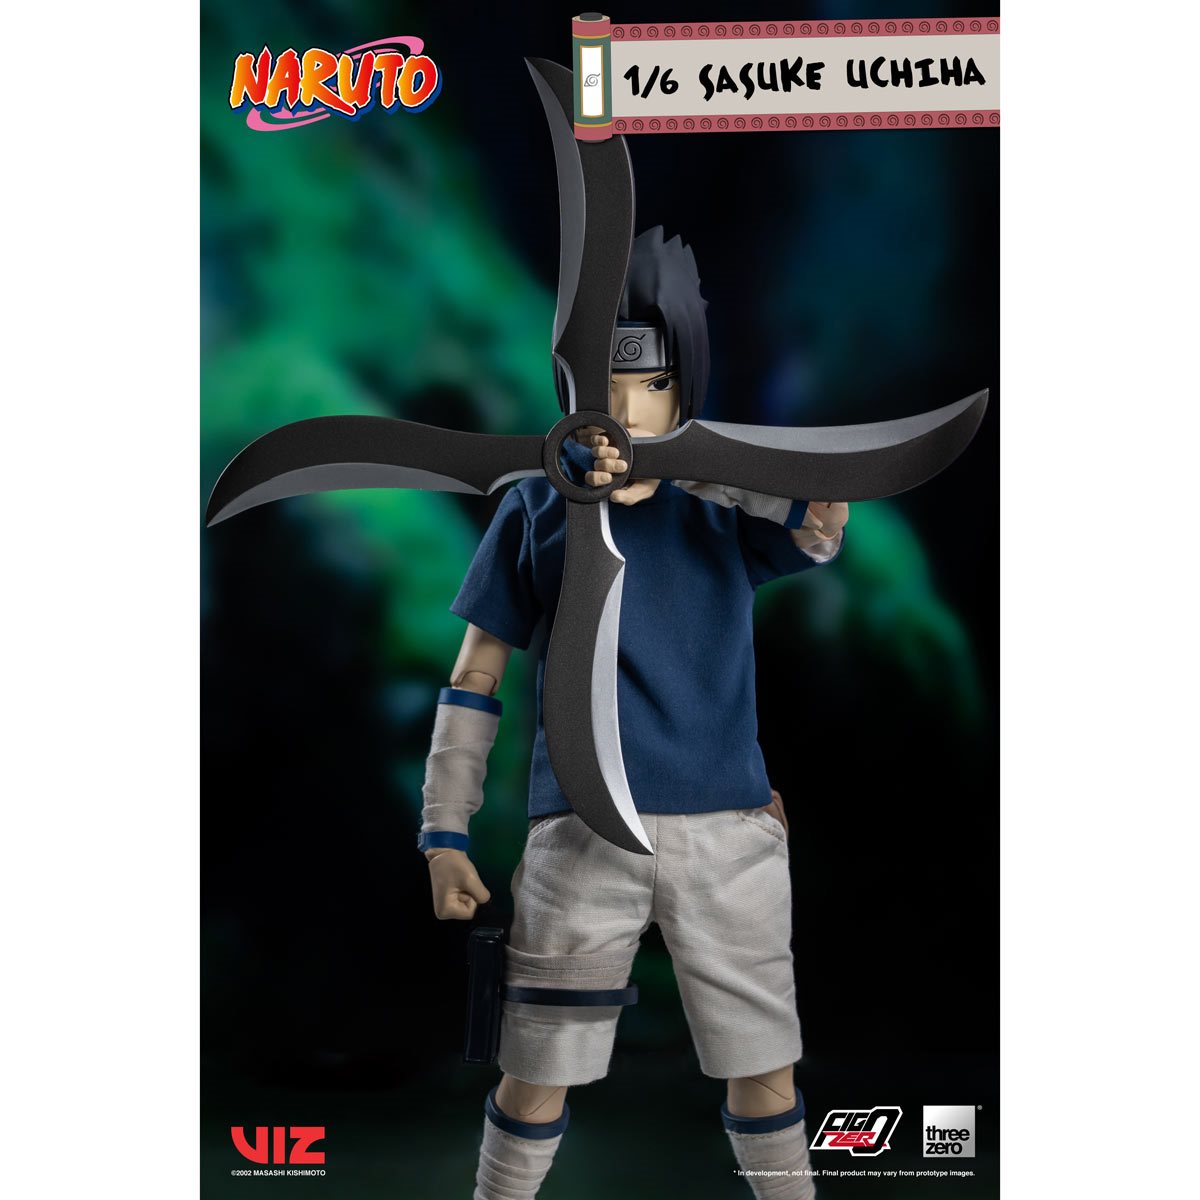 Uzumaki Naruto - FigZero - 1/6 Scale Collectible Figure - Naruto - ThreeZero